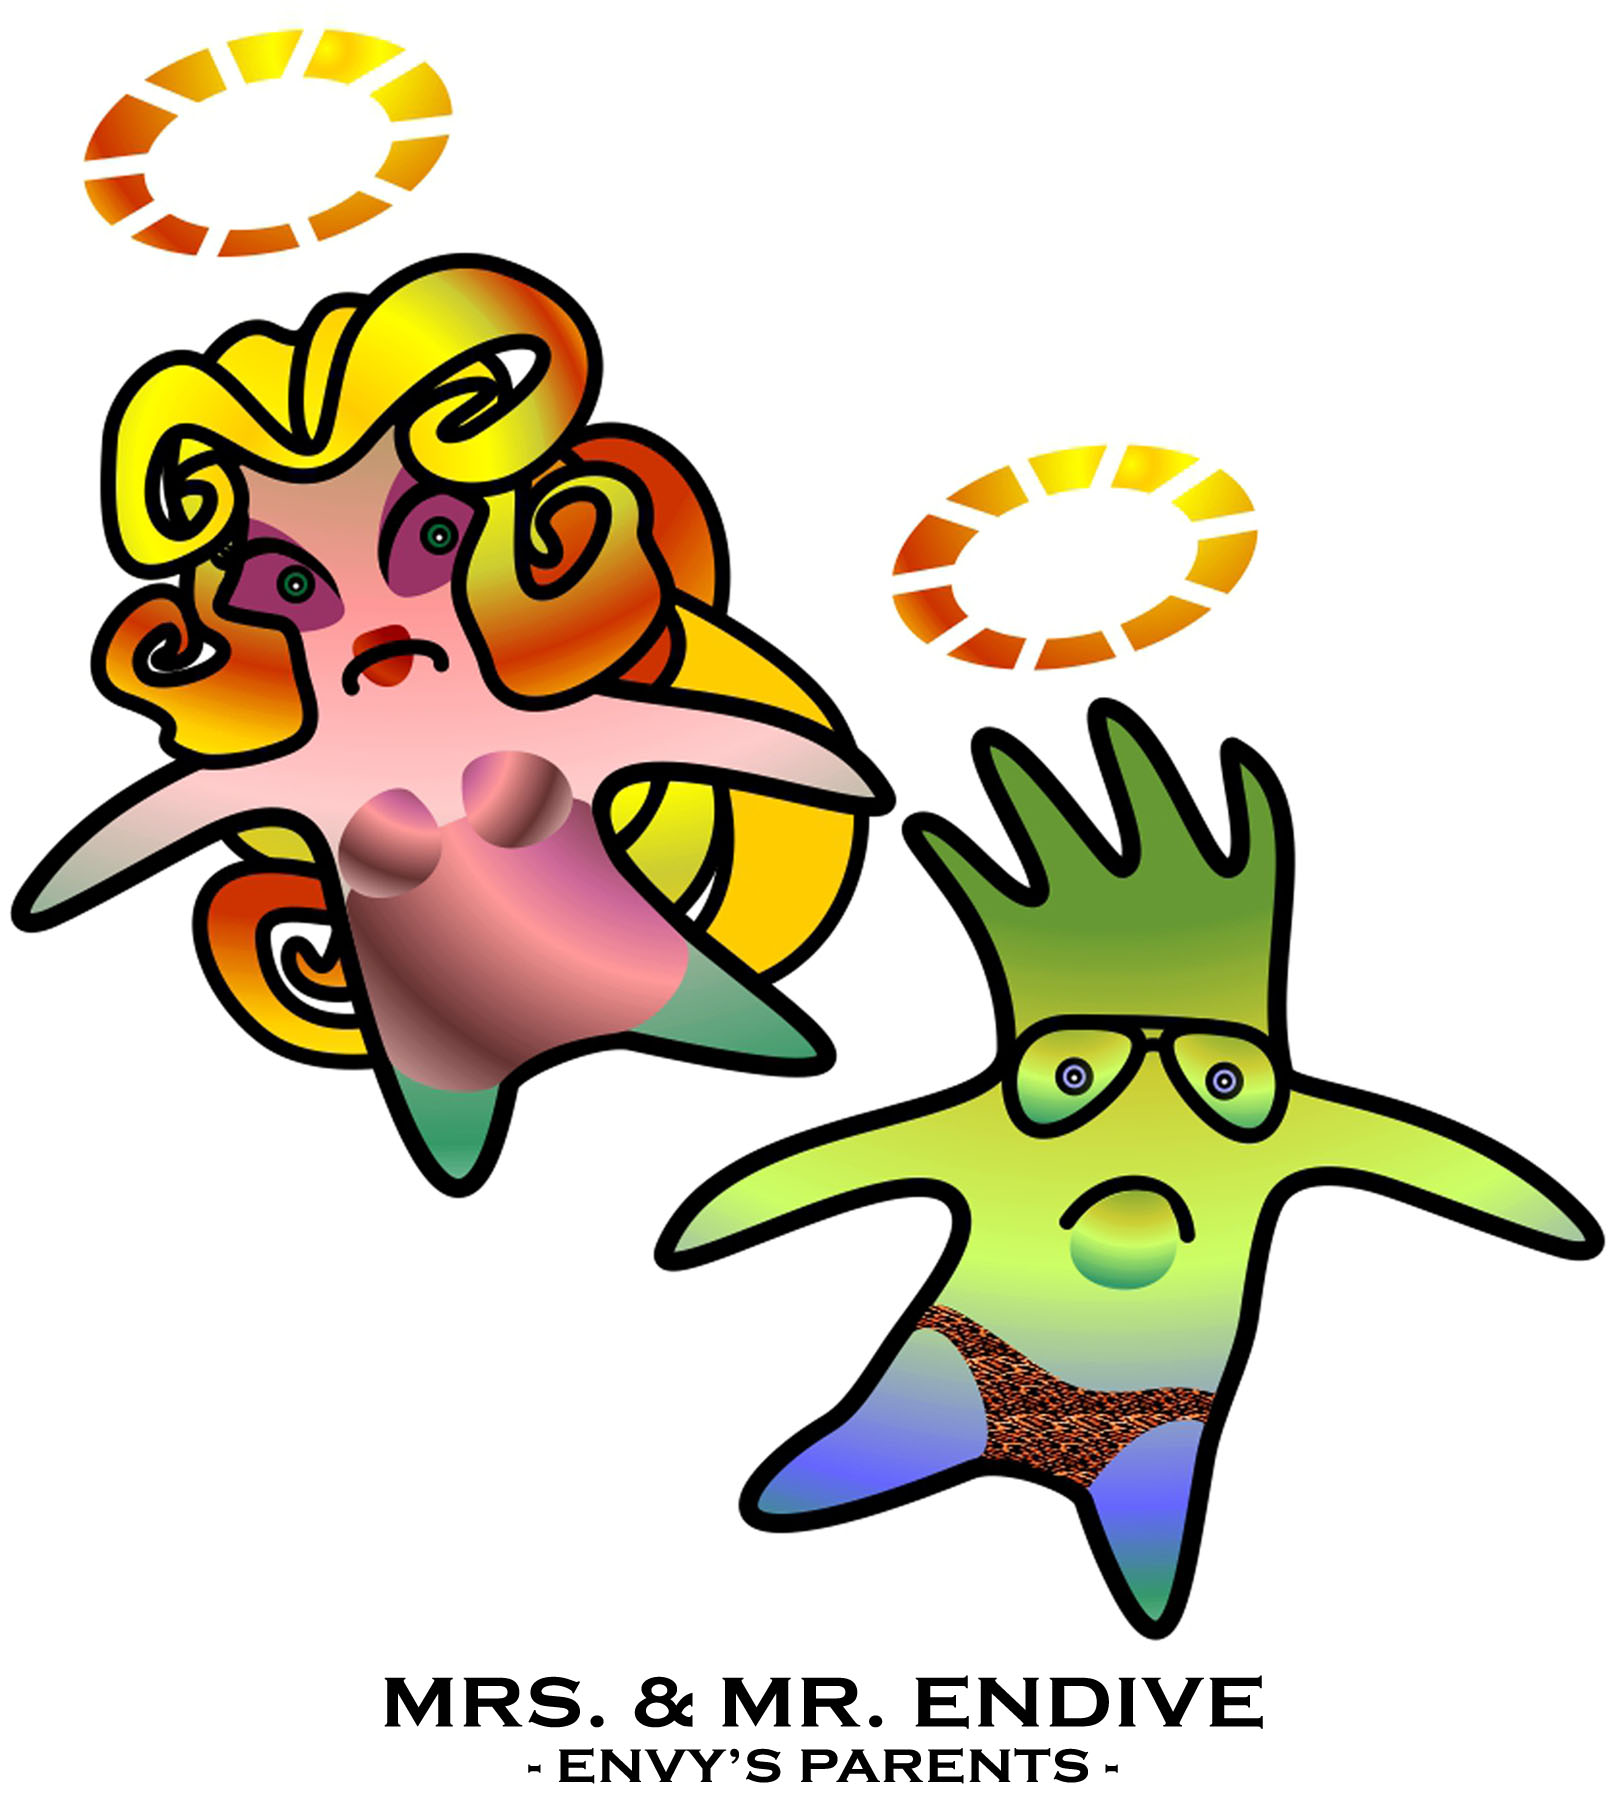 Mrs. & Mr. Endive